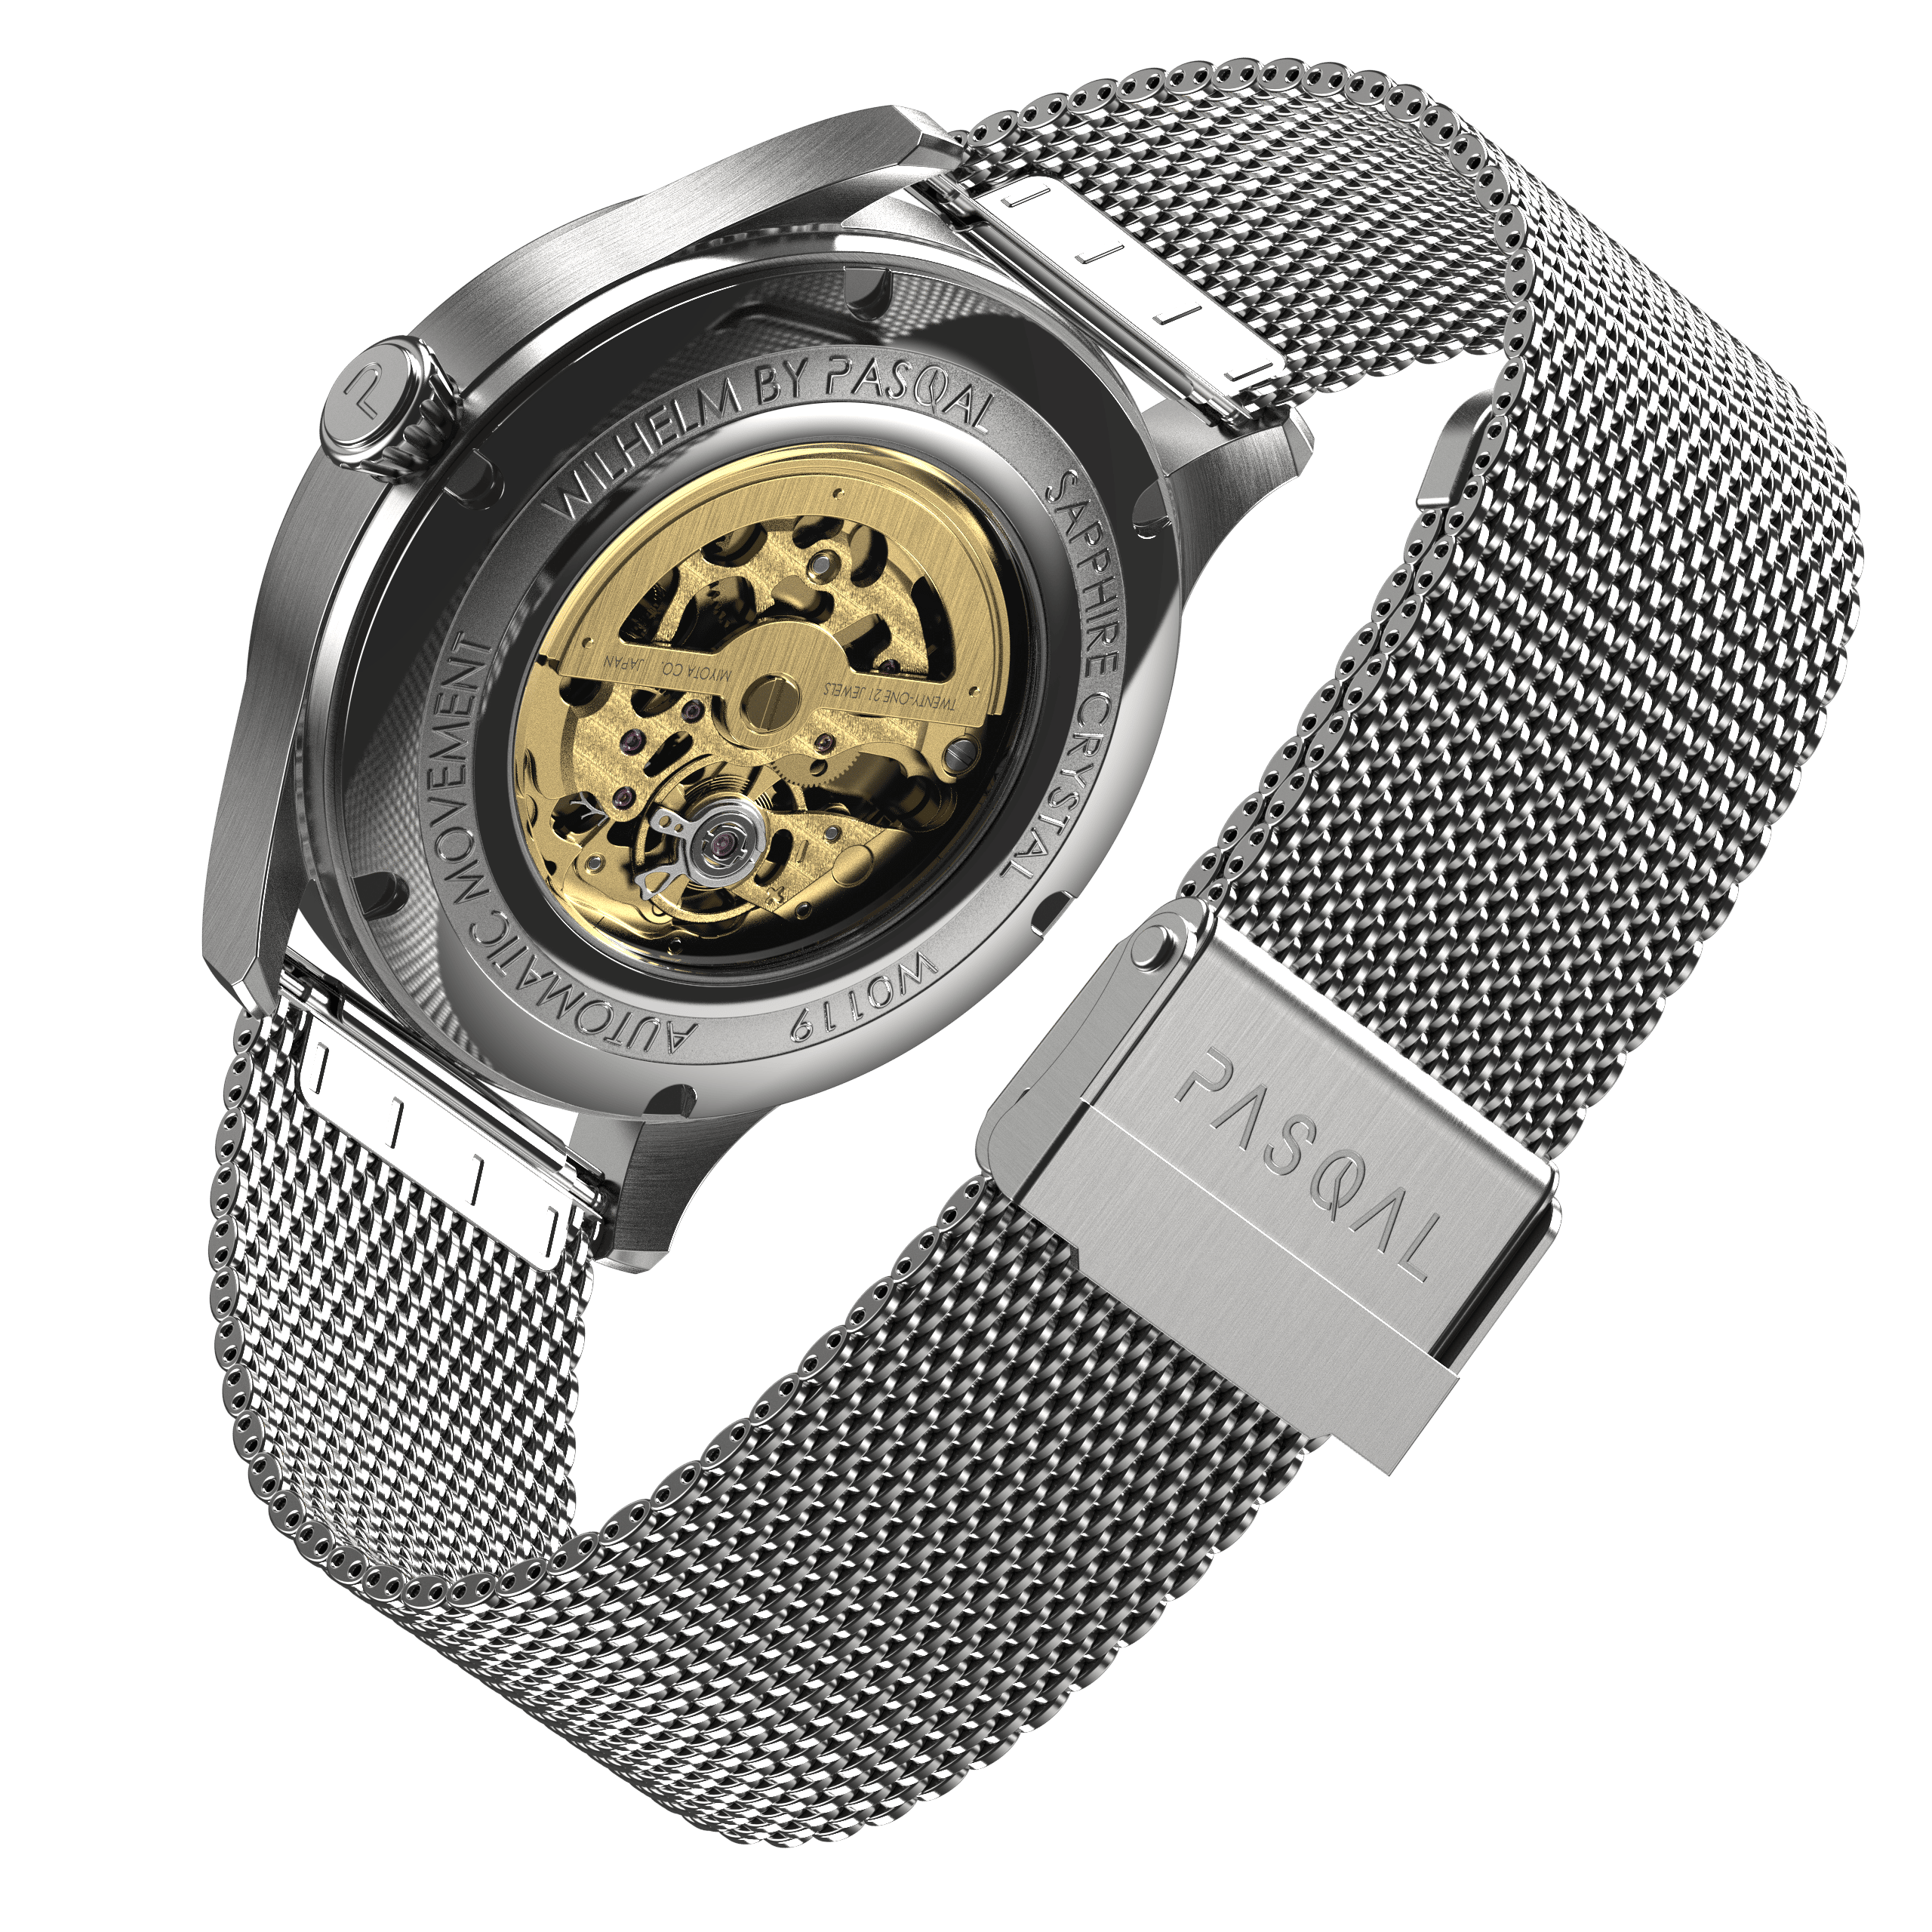 Wilhelm 42 Grey/Purple - Pasqal Watches